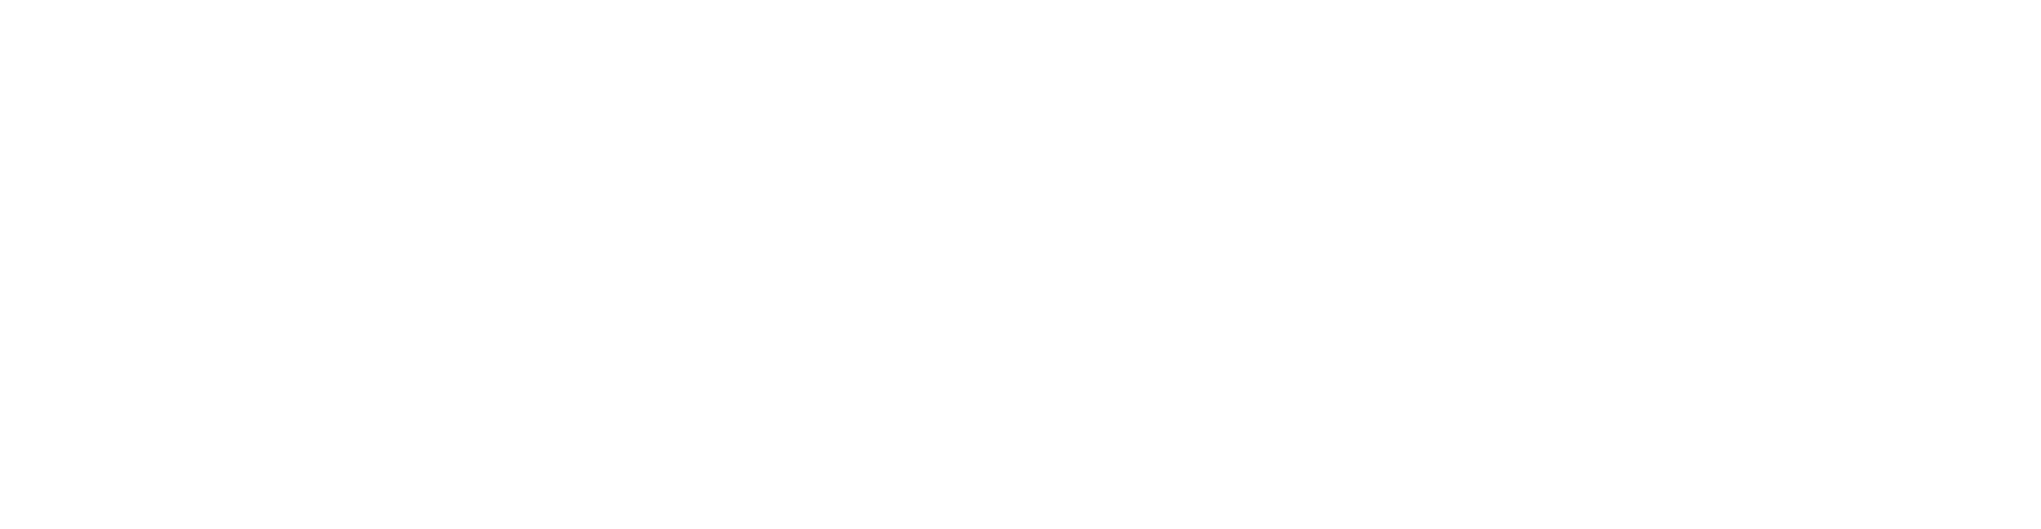 Aerosoft_Logo_White Kopie